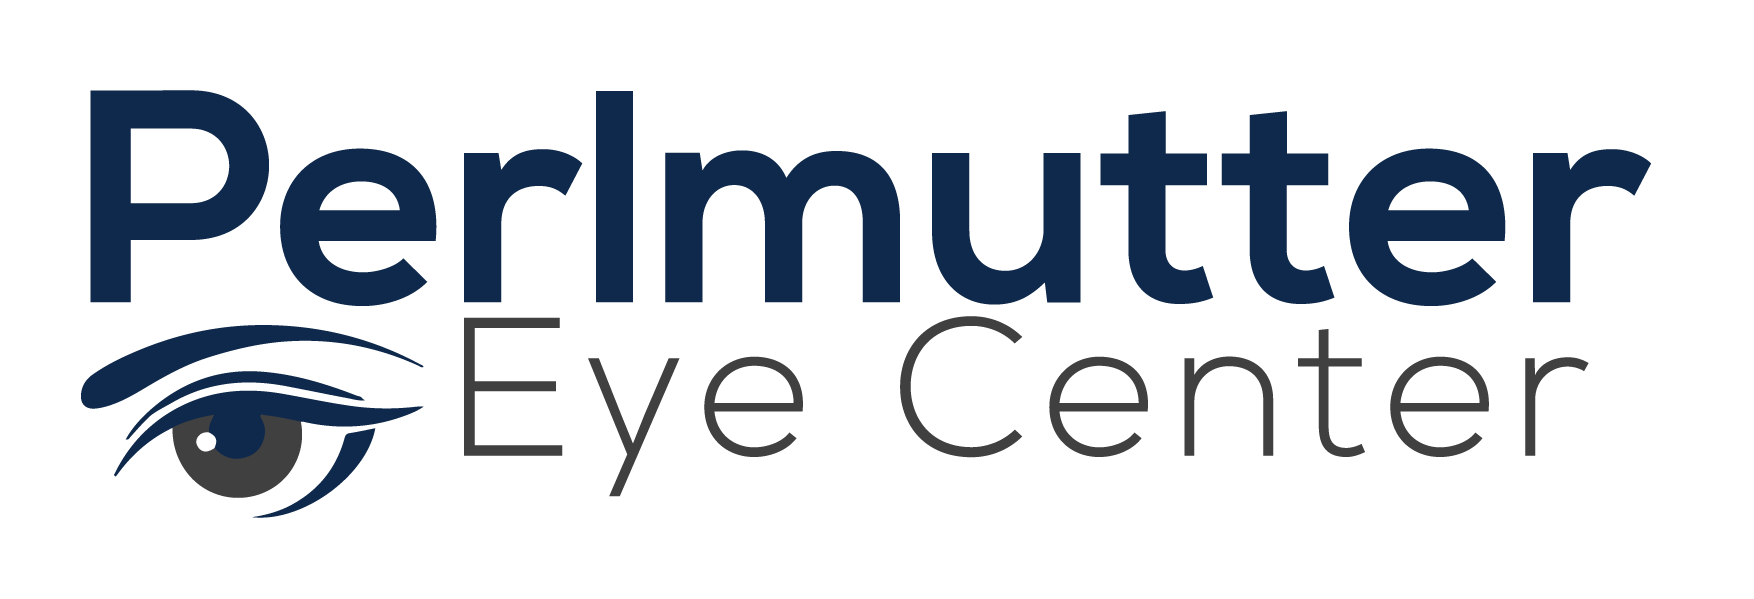 Perlmutter Eye Center